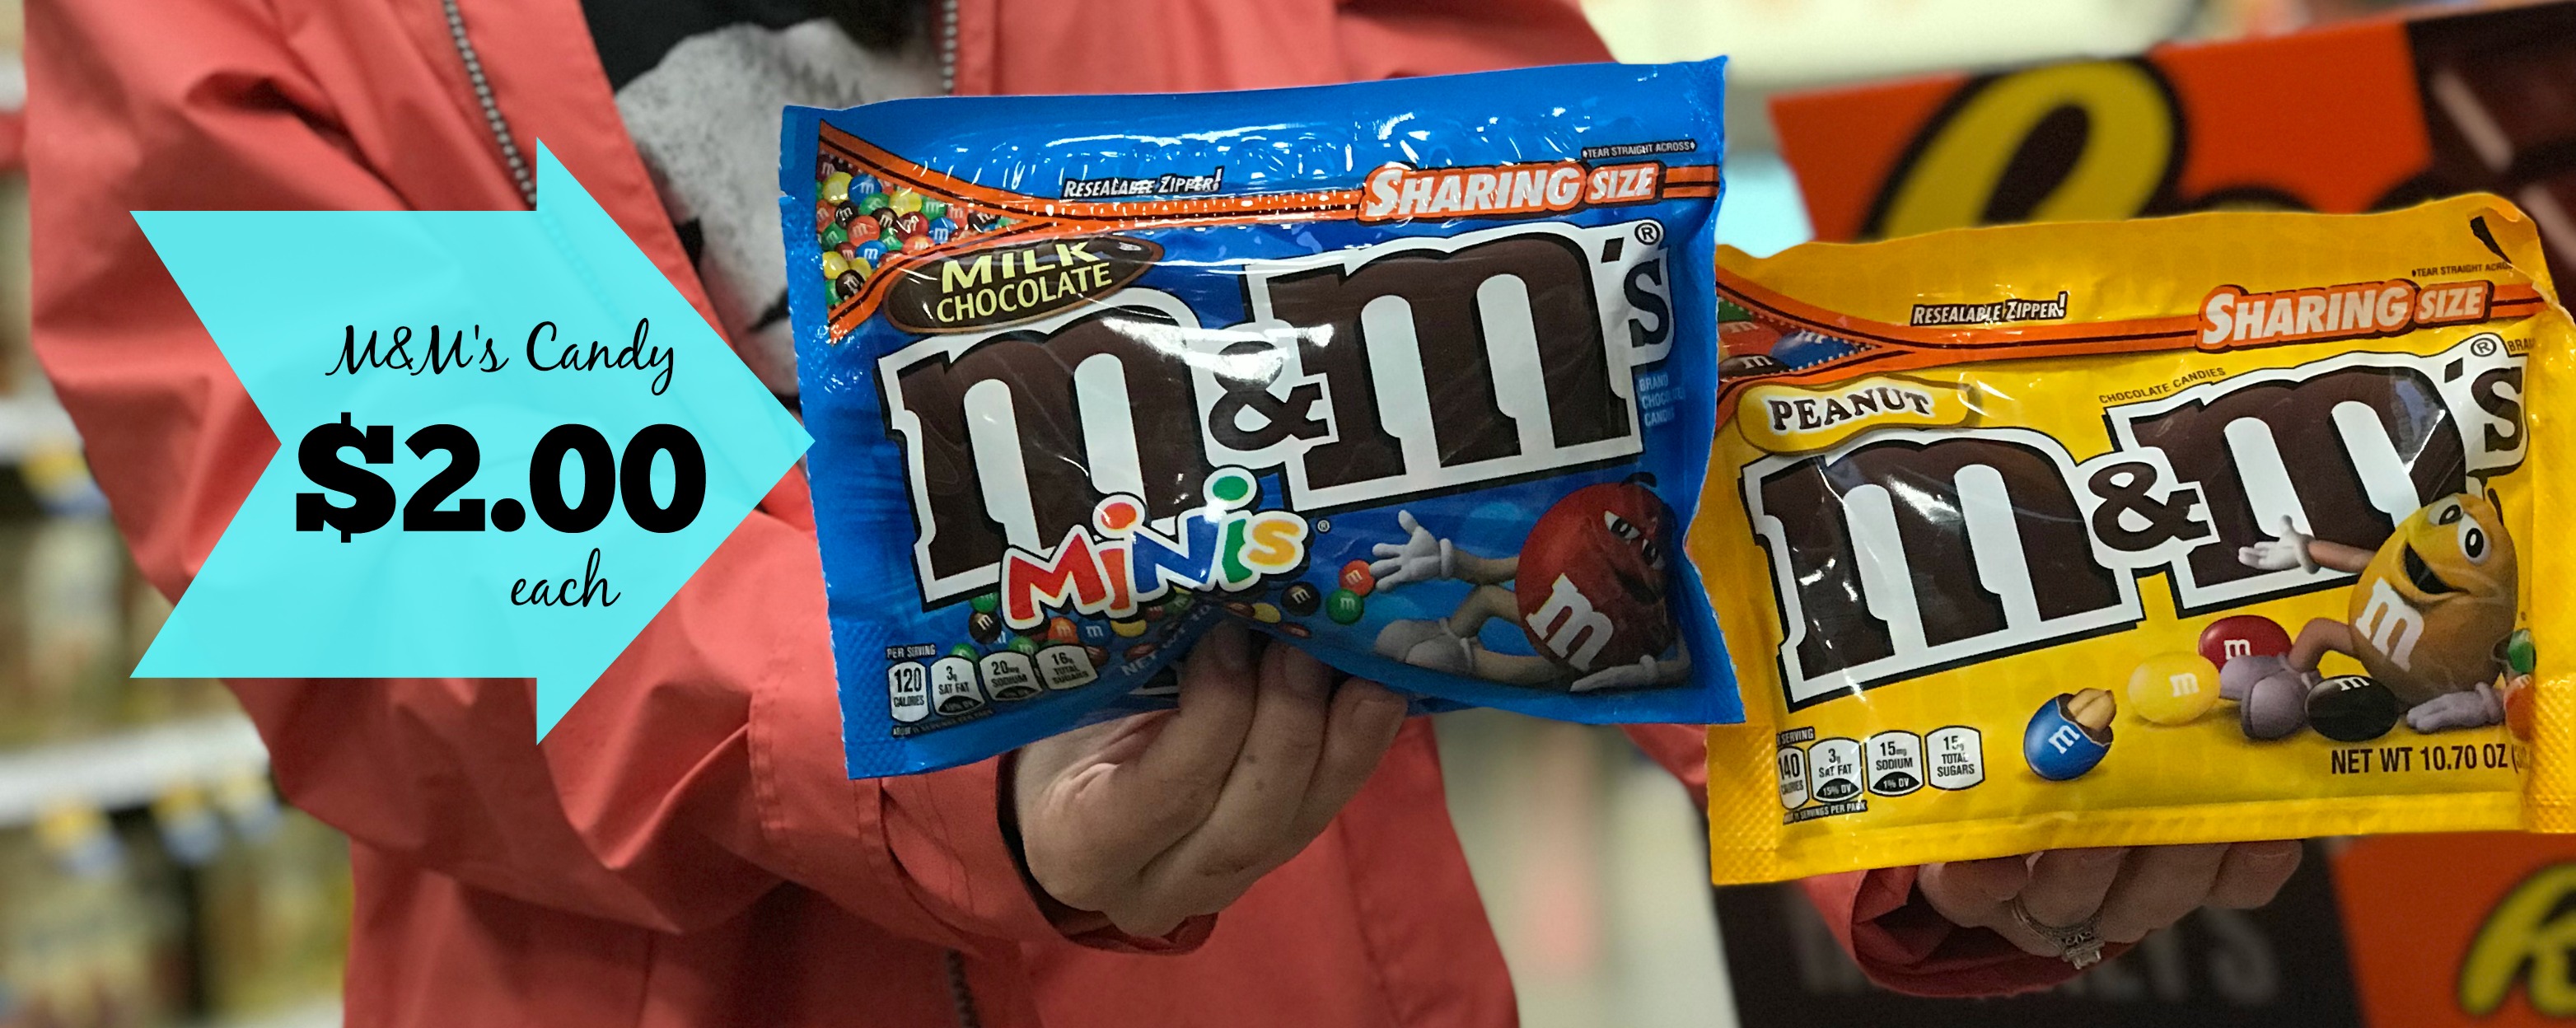 M&M'S Milk Chocolate Candy Sharing Size Bag, 10.7 oz - Kroger